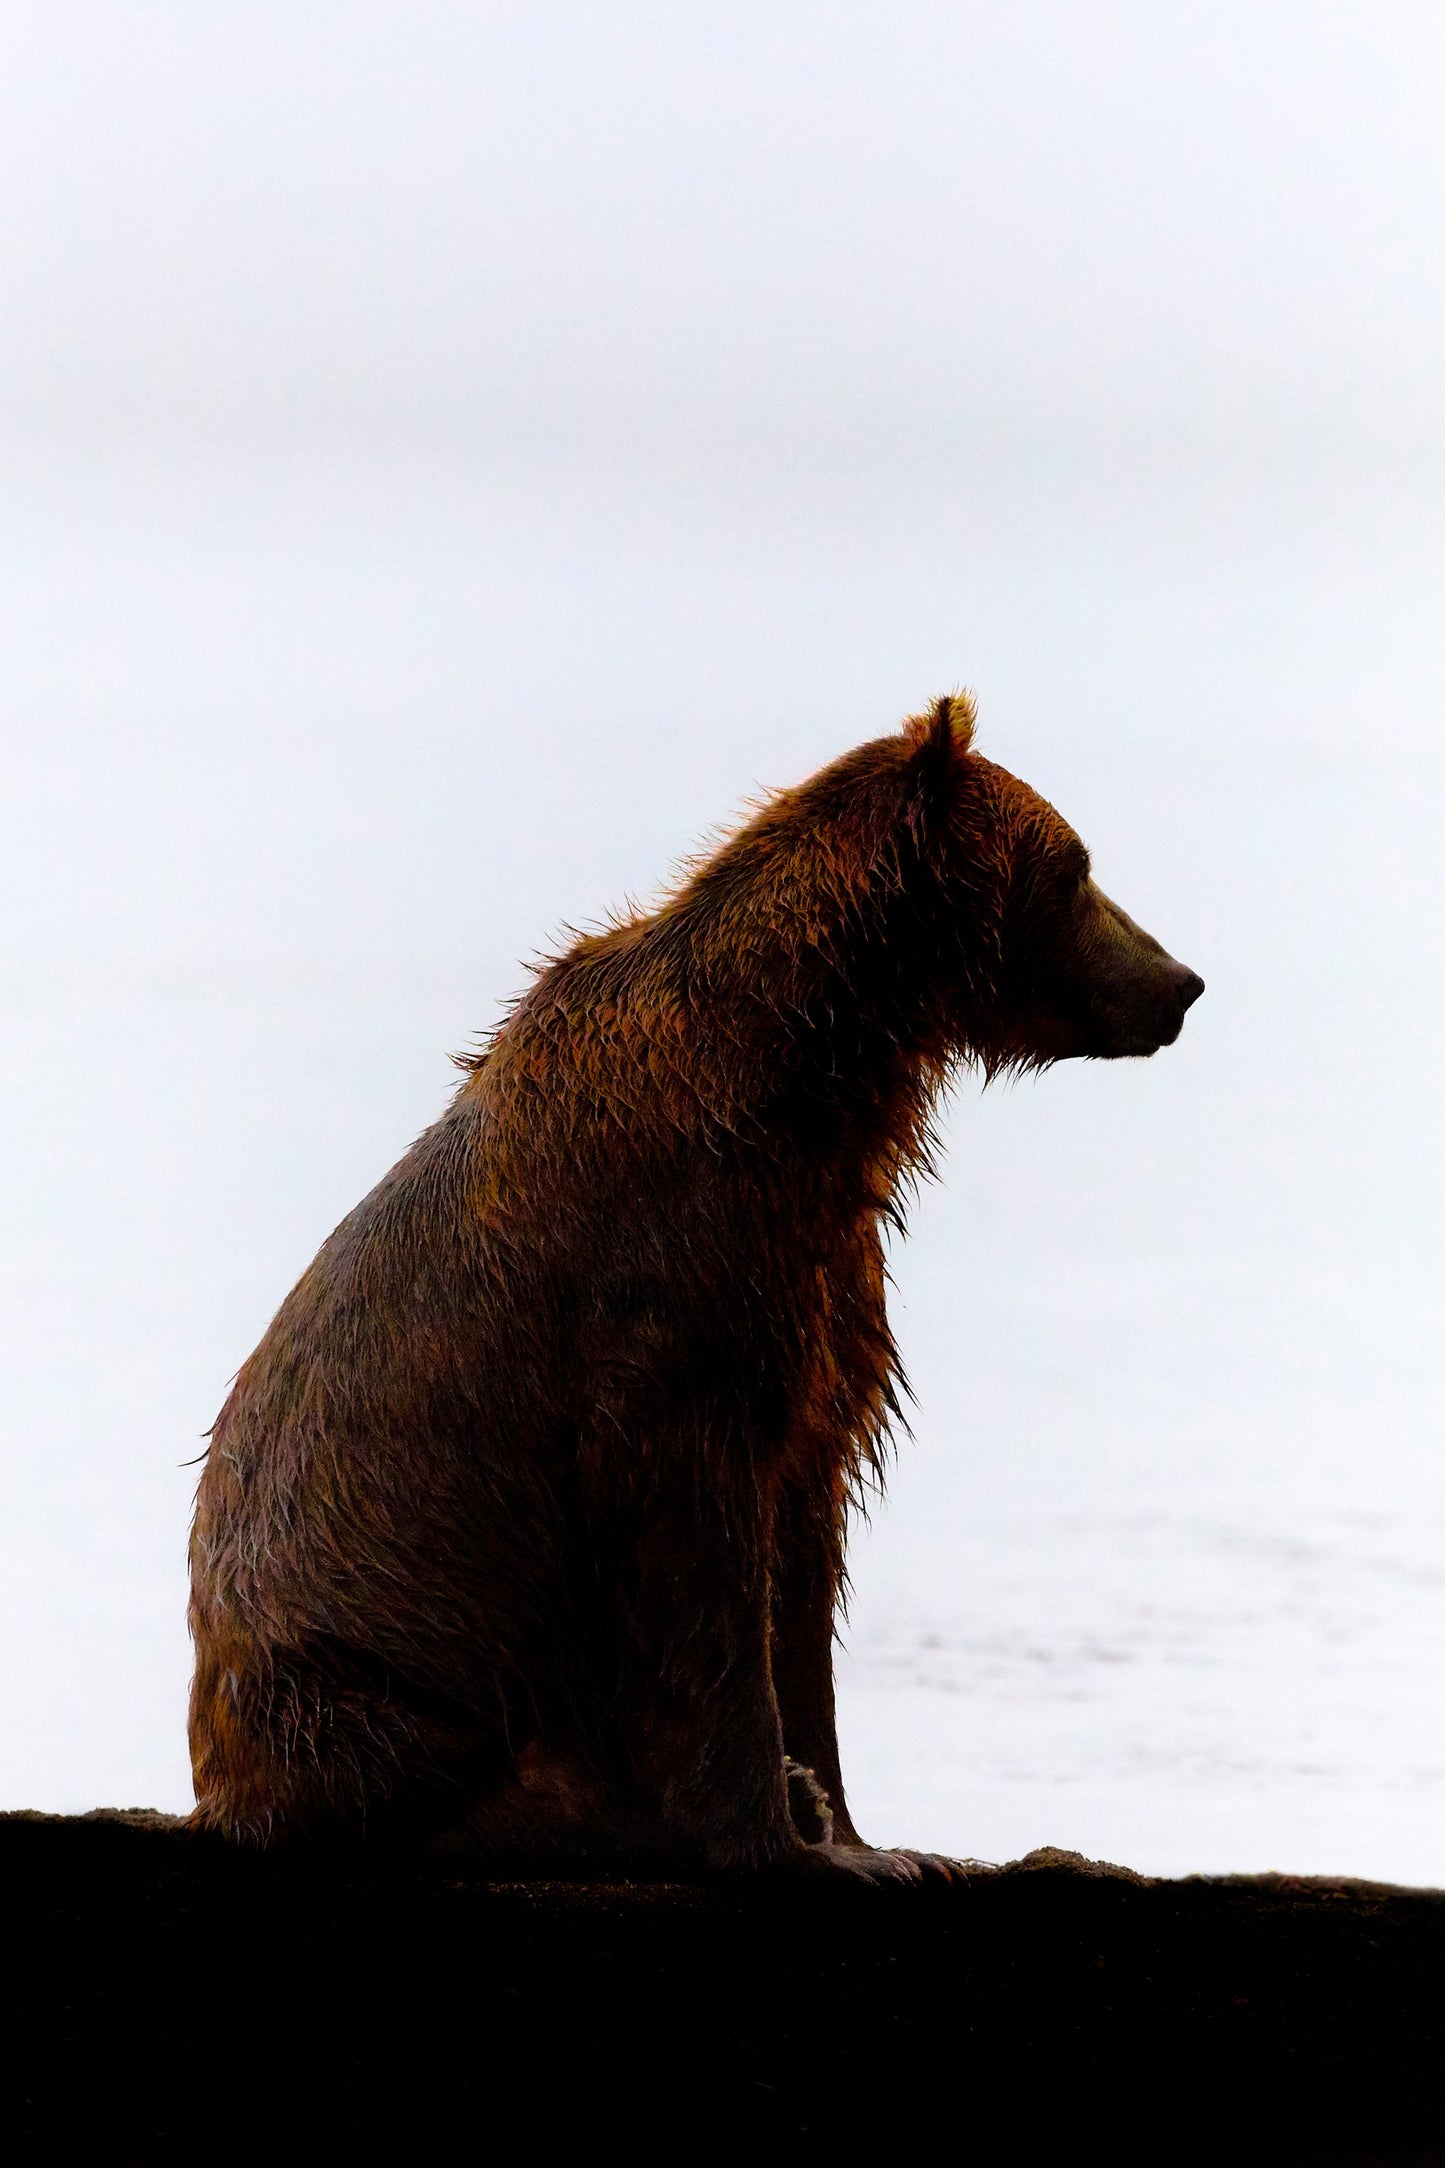 Silent sentinel - Brown bear, Kamchatka Russia